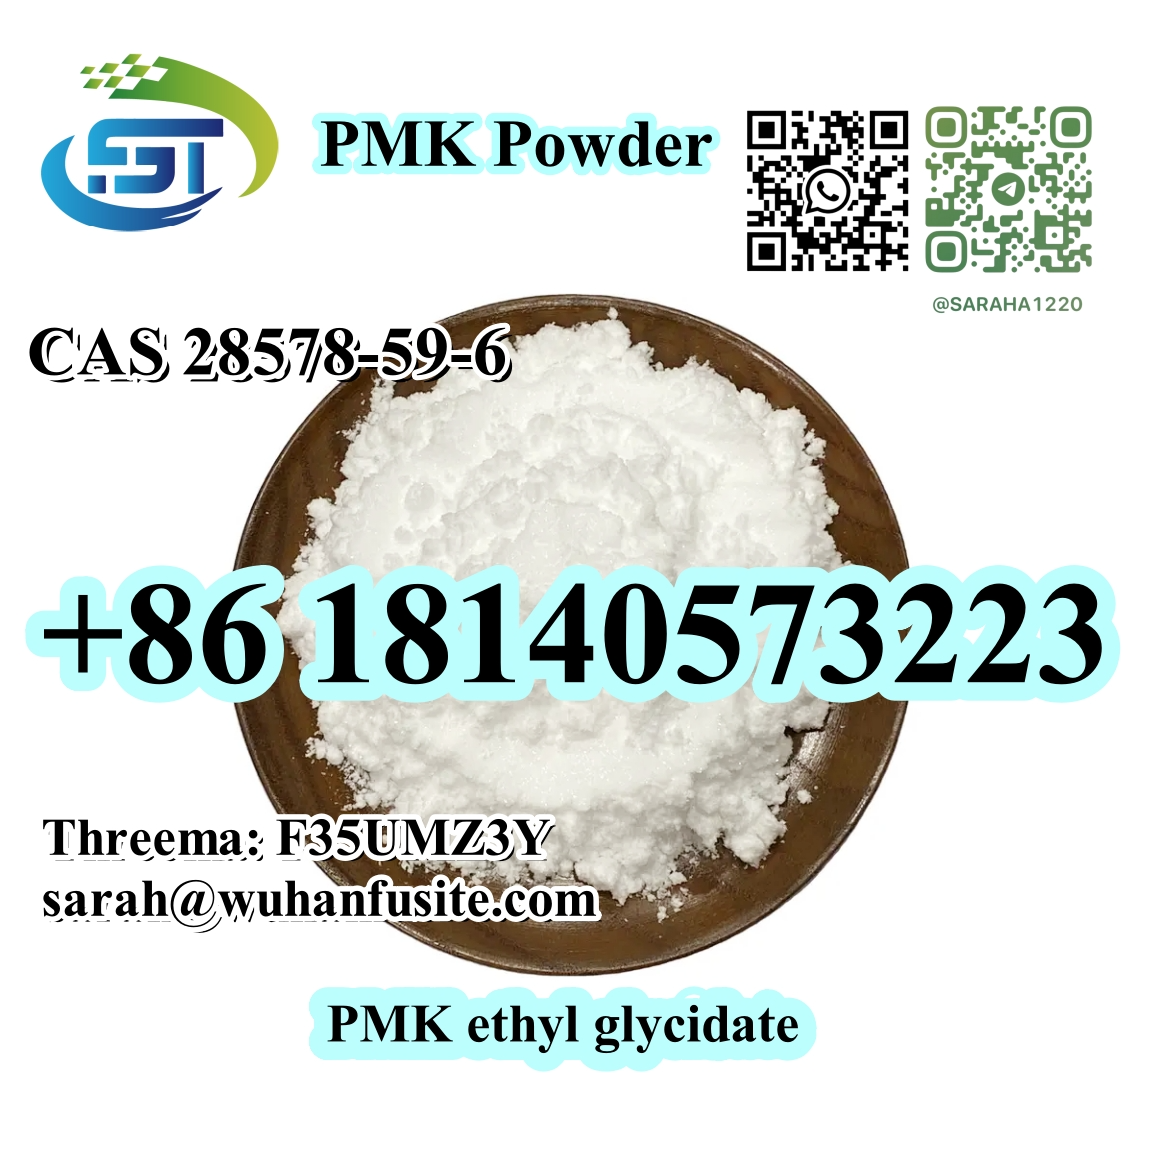 www.rentingglobal.com, renting, global, Wuhan, Hubei, China, pmk,pmk powder,cas 28578-16-7, CAS 28578-16-7 PMK ethyl glycidate With High purity